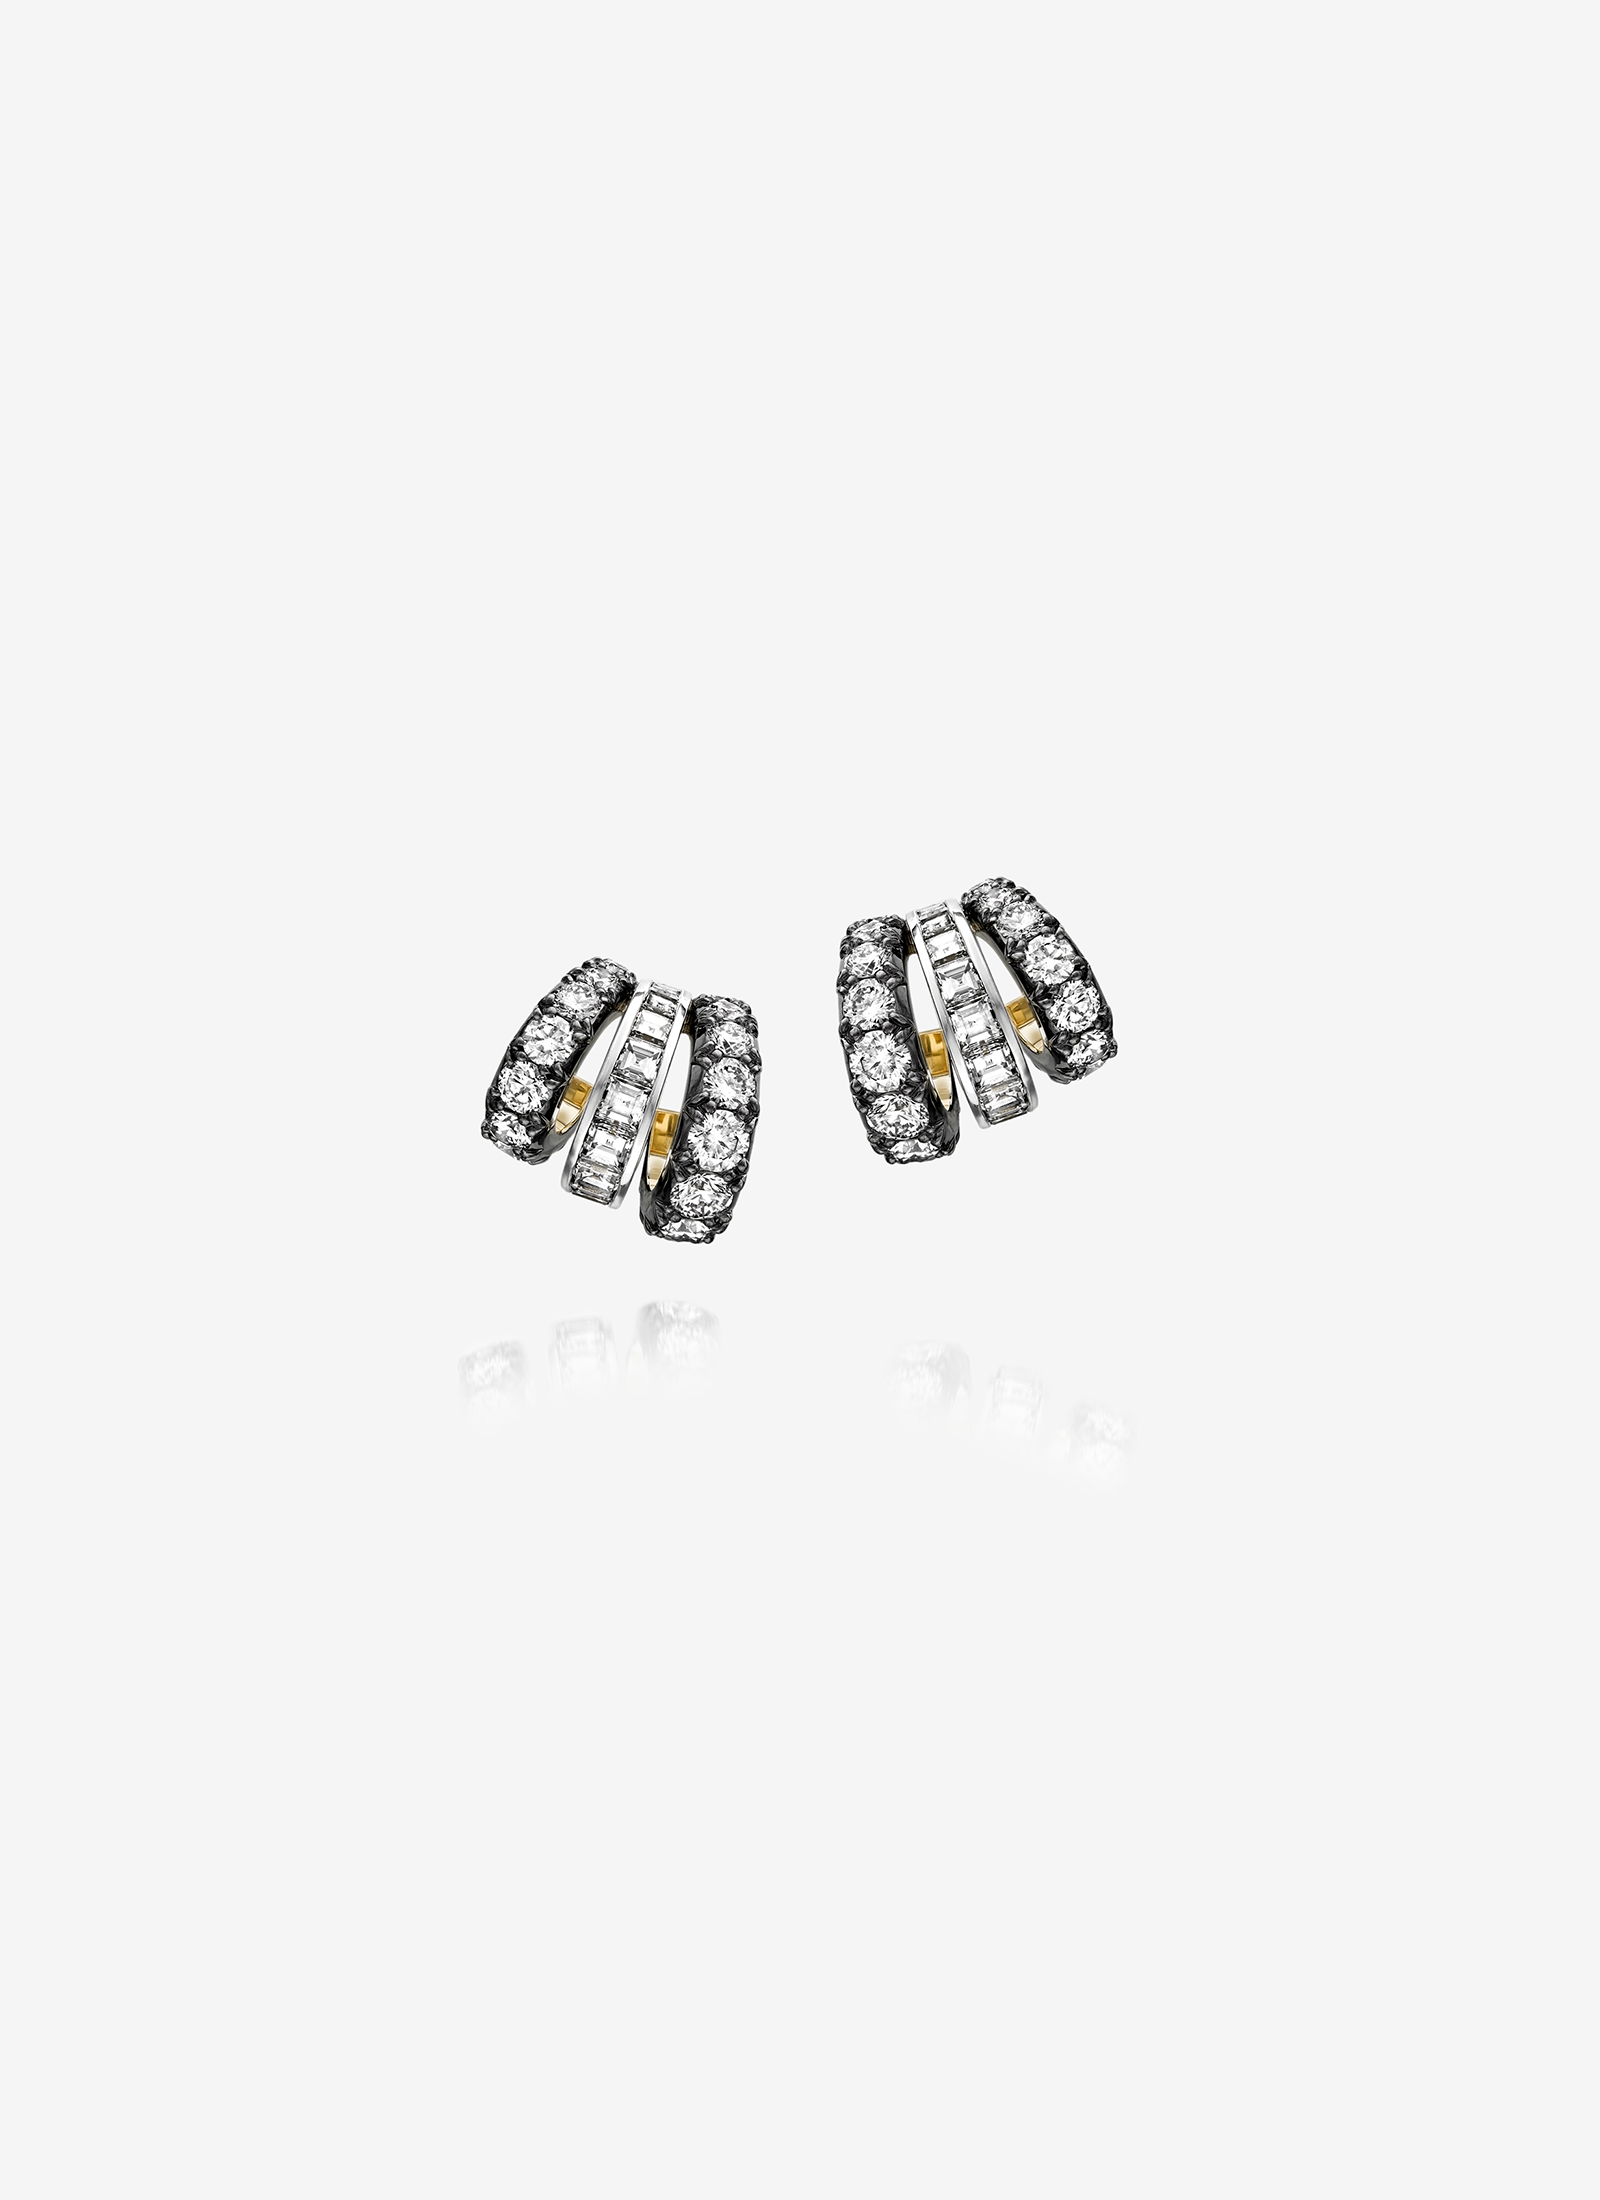 Signature Earrings - Diamond Tripset Hoops